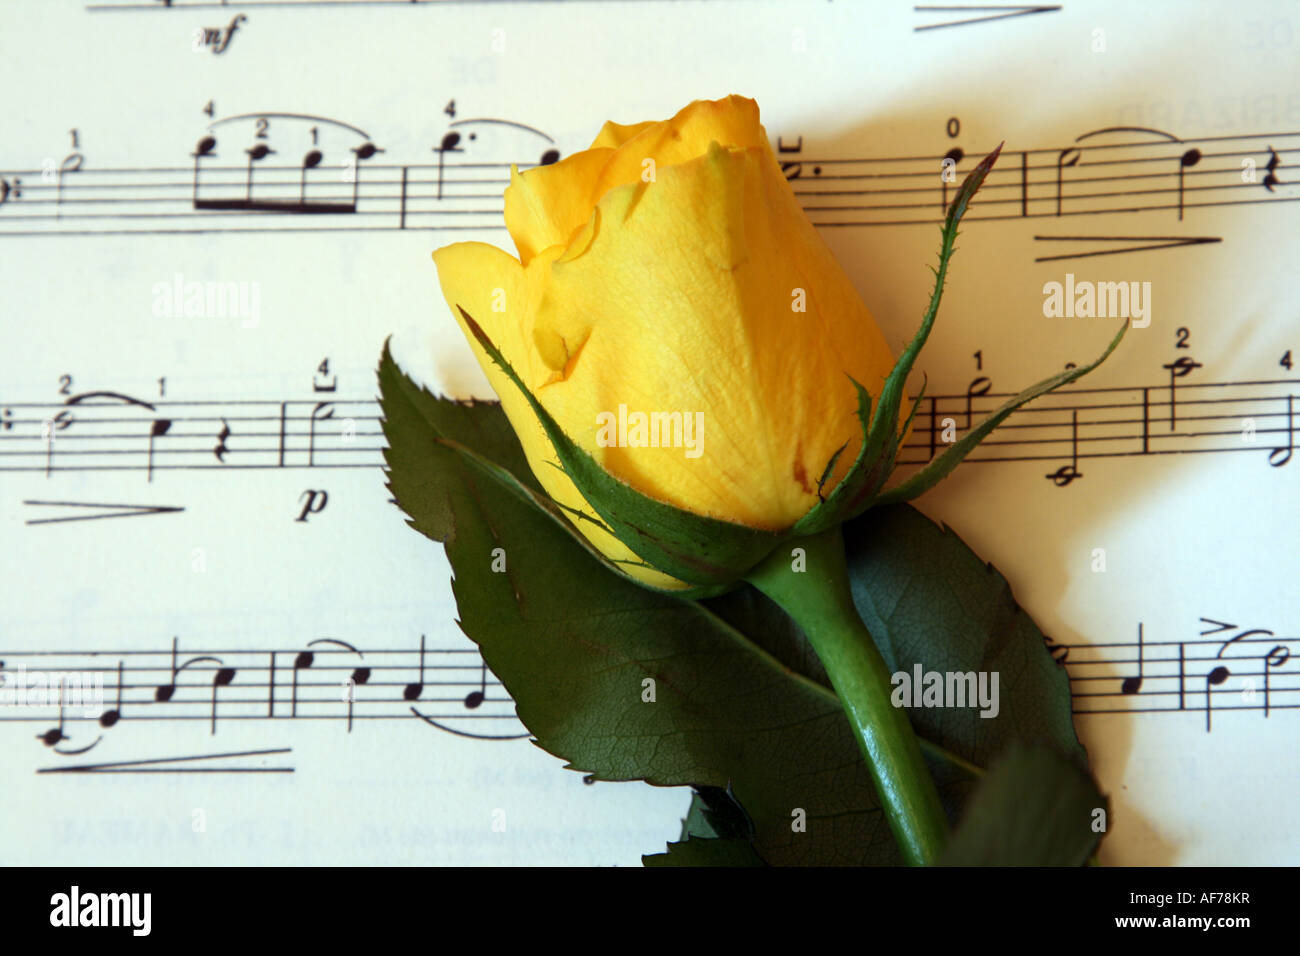 yellow rose and music score Stock Photo